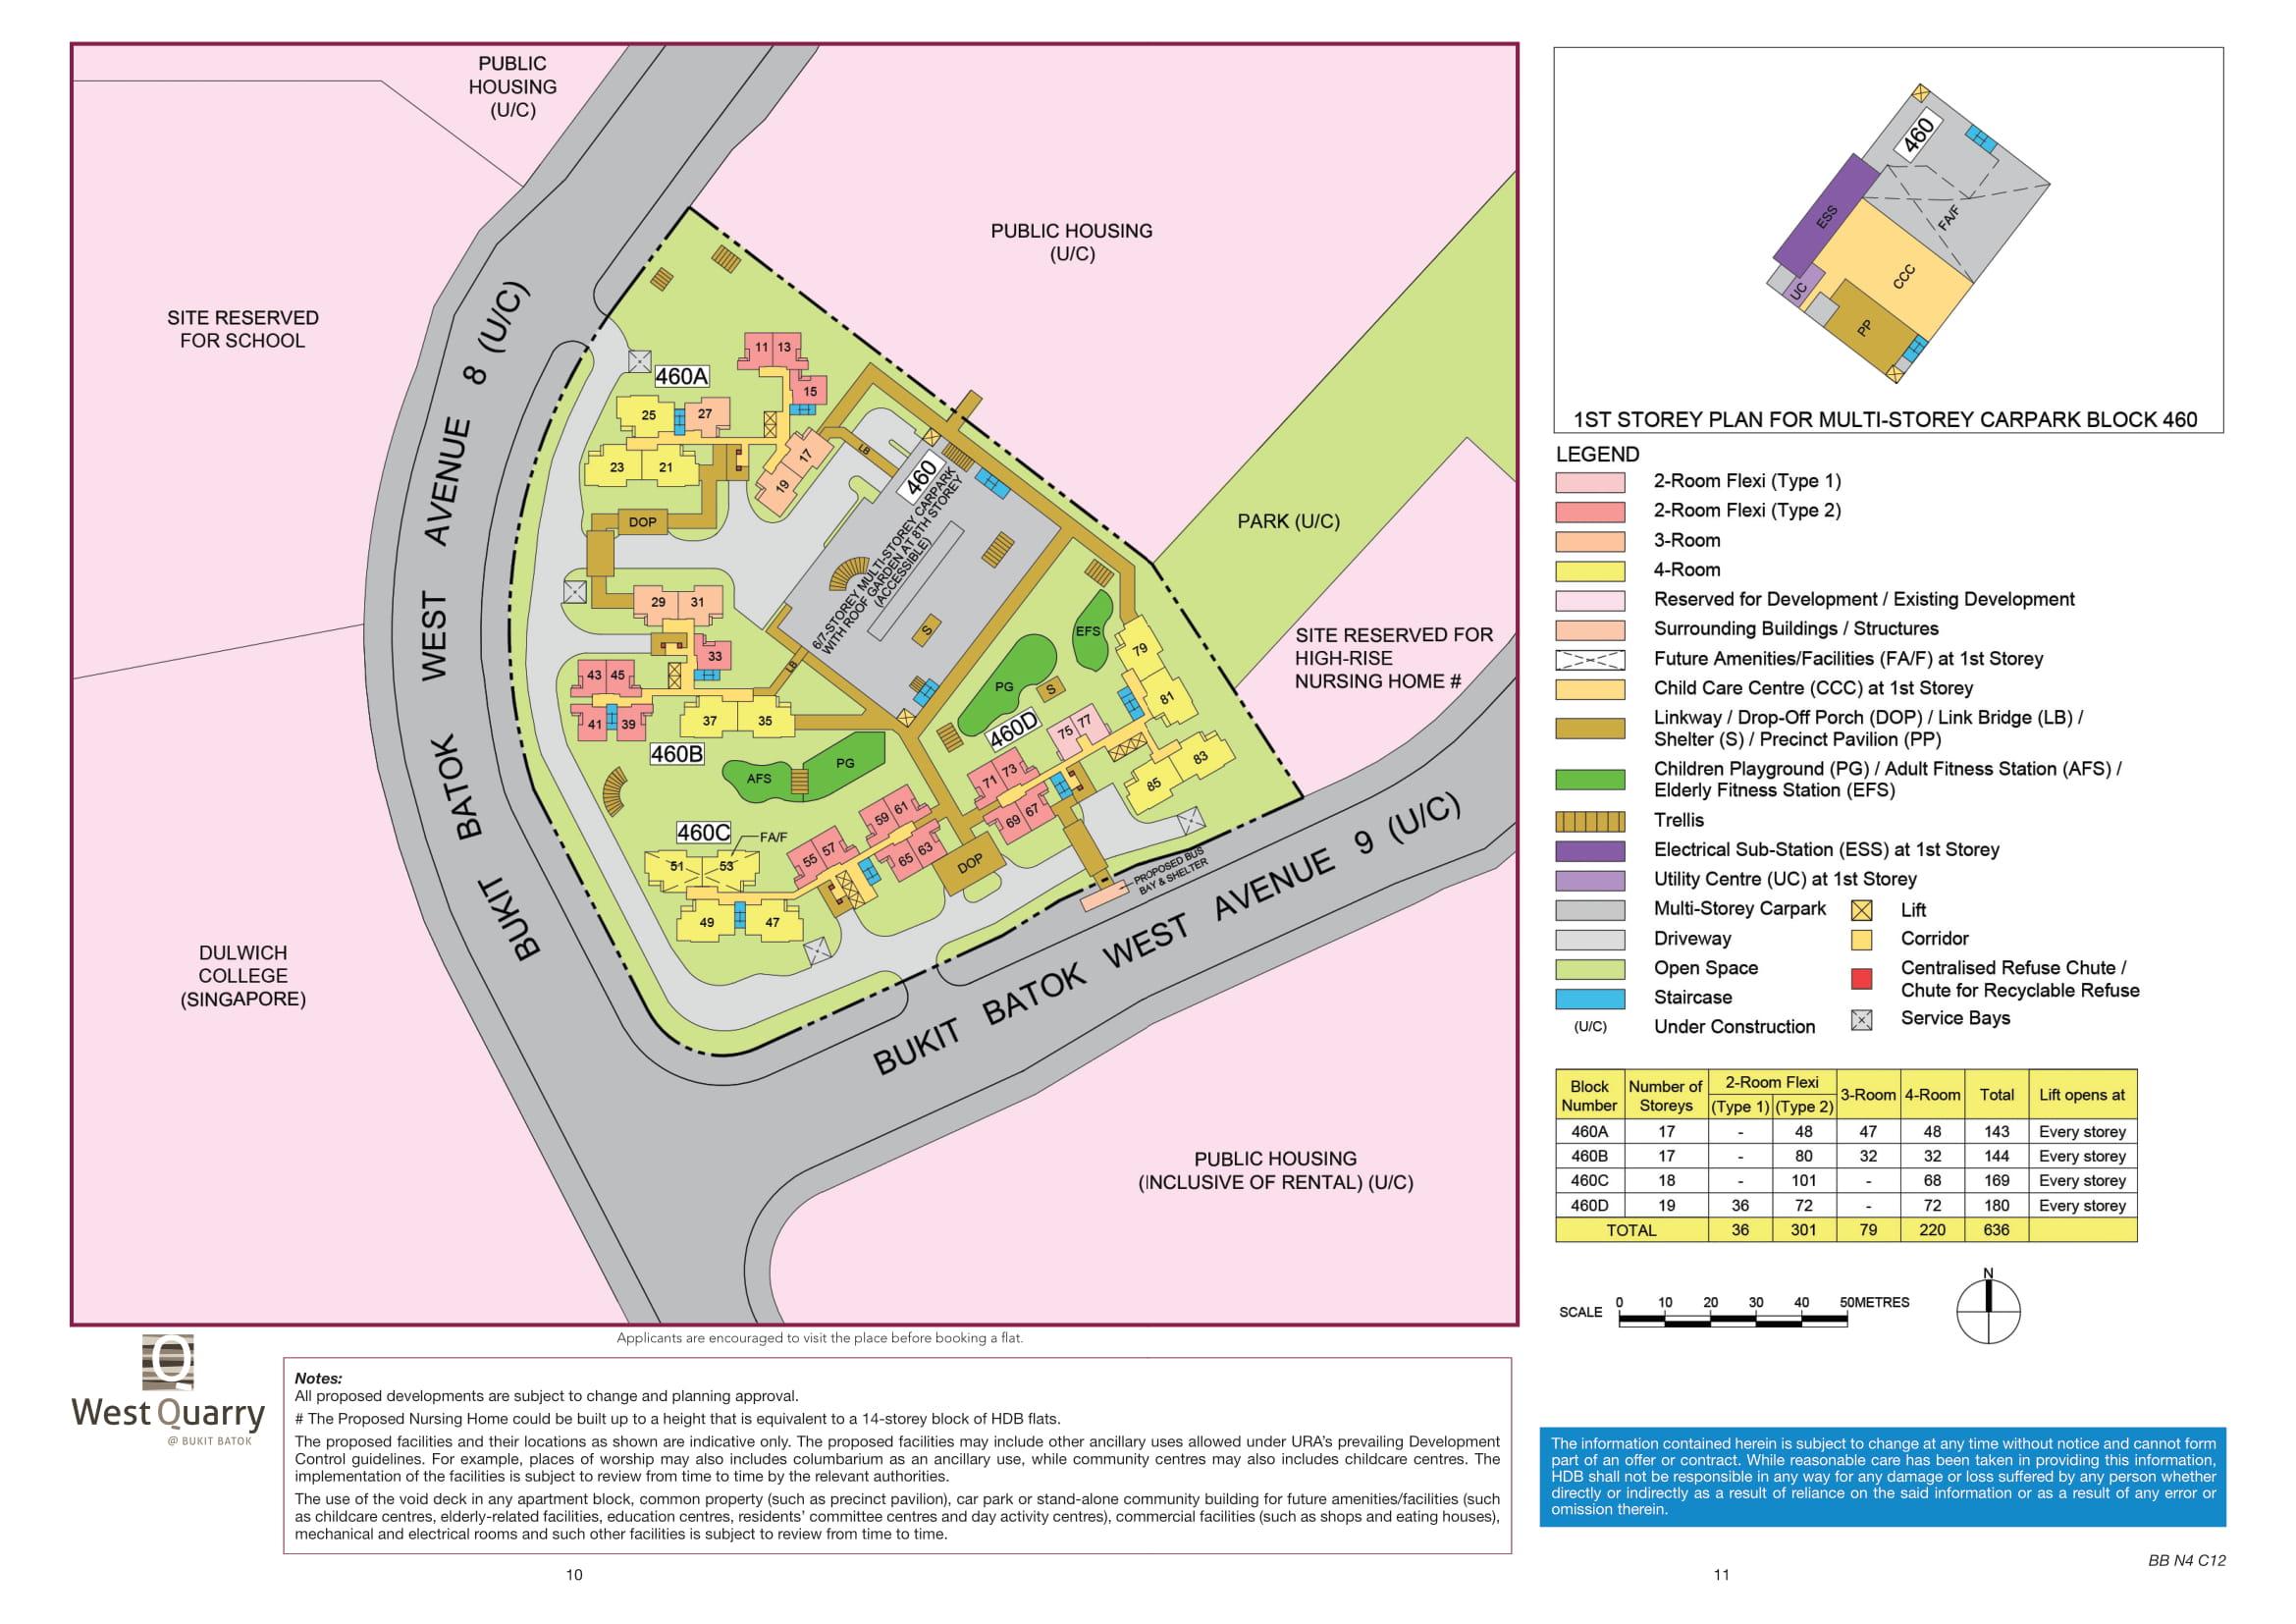 West Quarry @ Bukit Batok site-plan